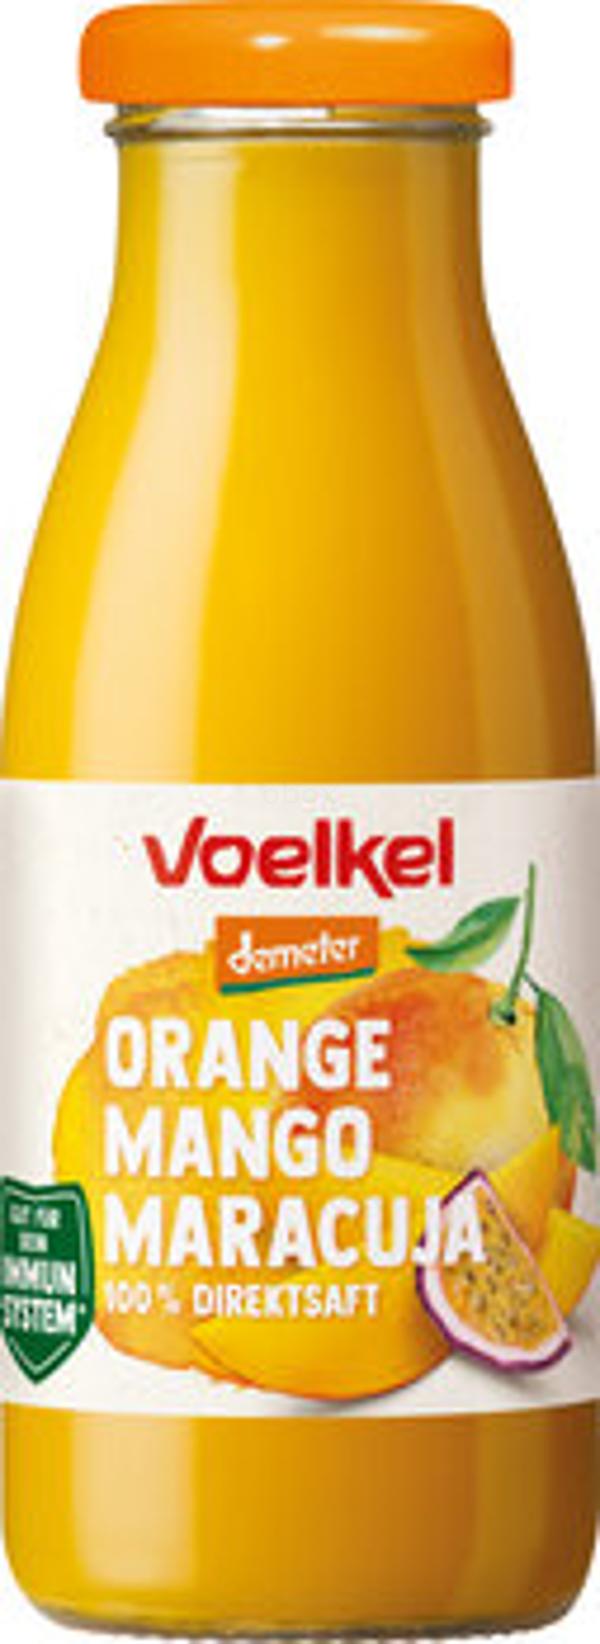 Produktfoto zu fair to go Orange Mango Maracuja (Glas) Demeter 0,25l